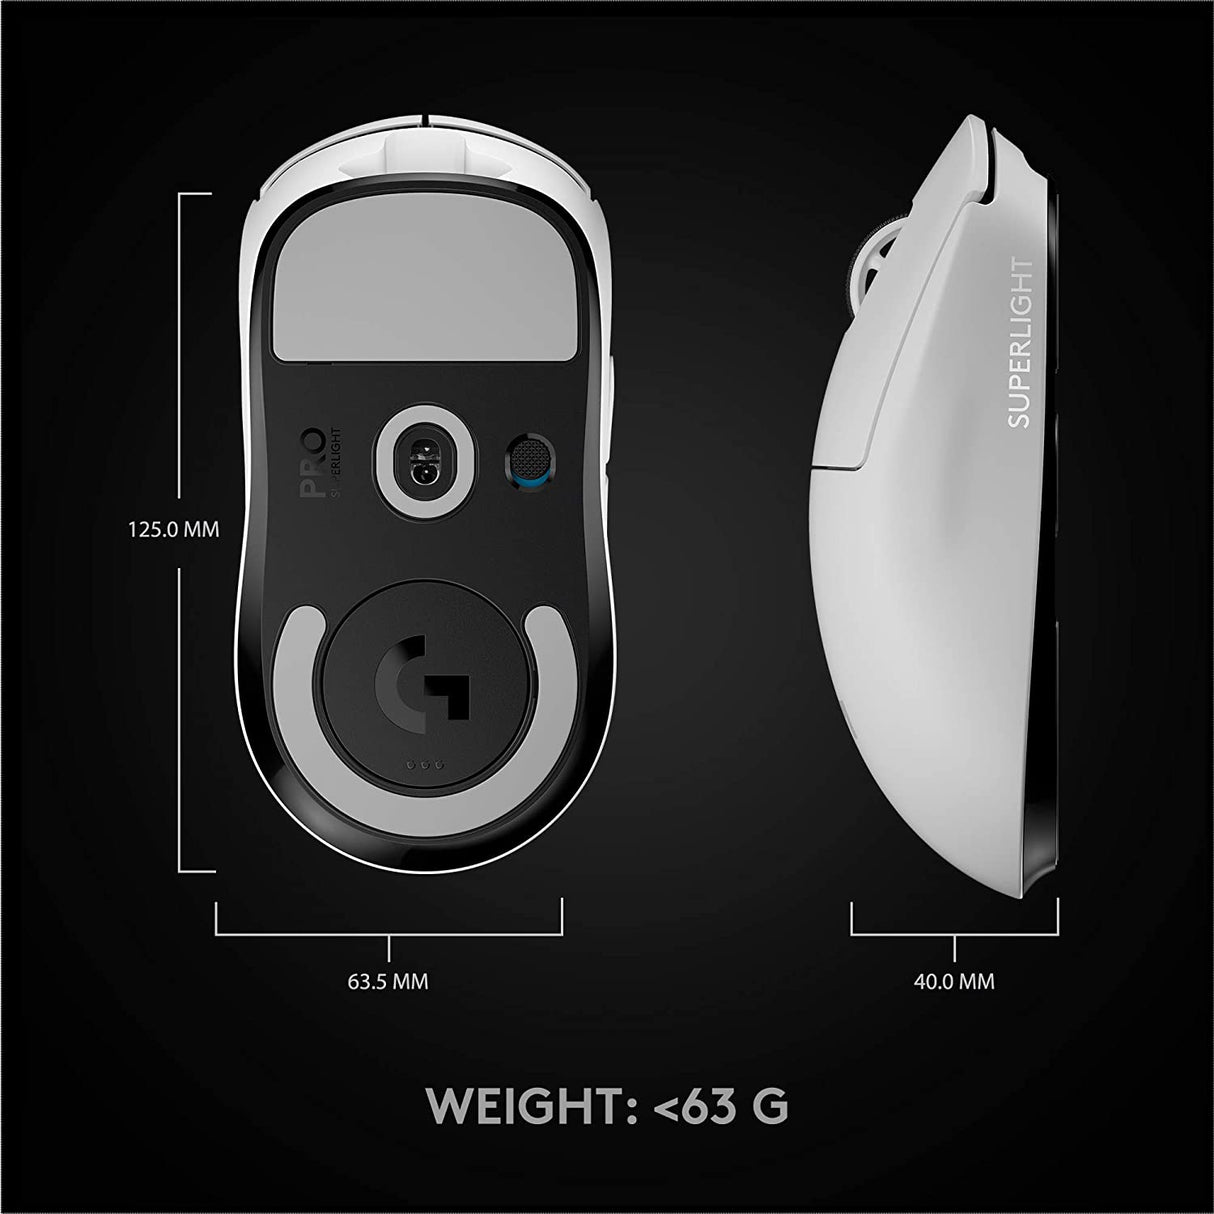 Logitech PRO X Superlight Wireless Gaming Mouse